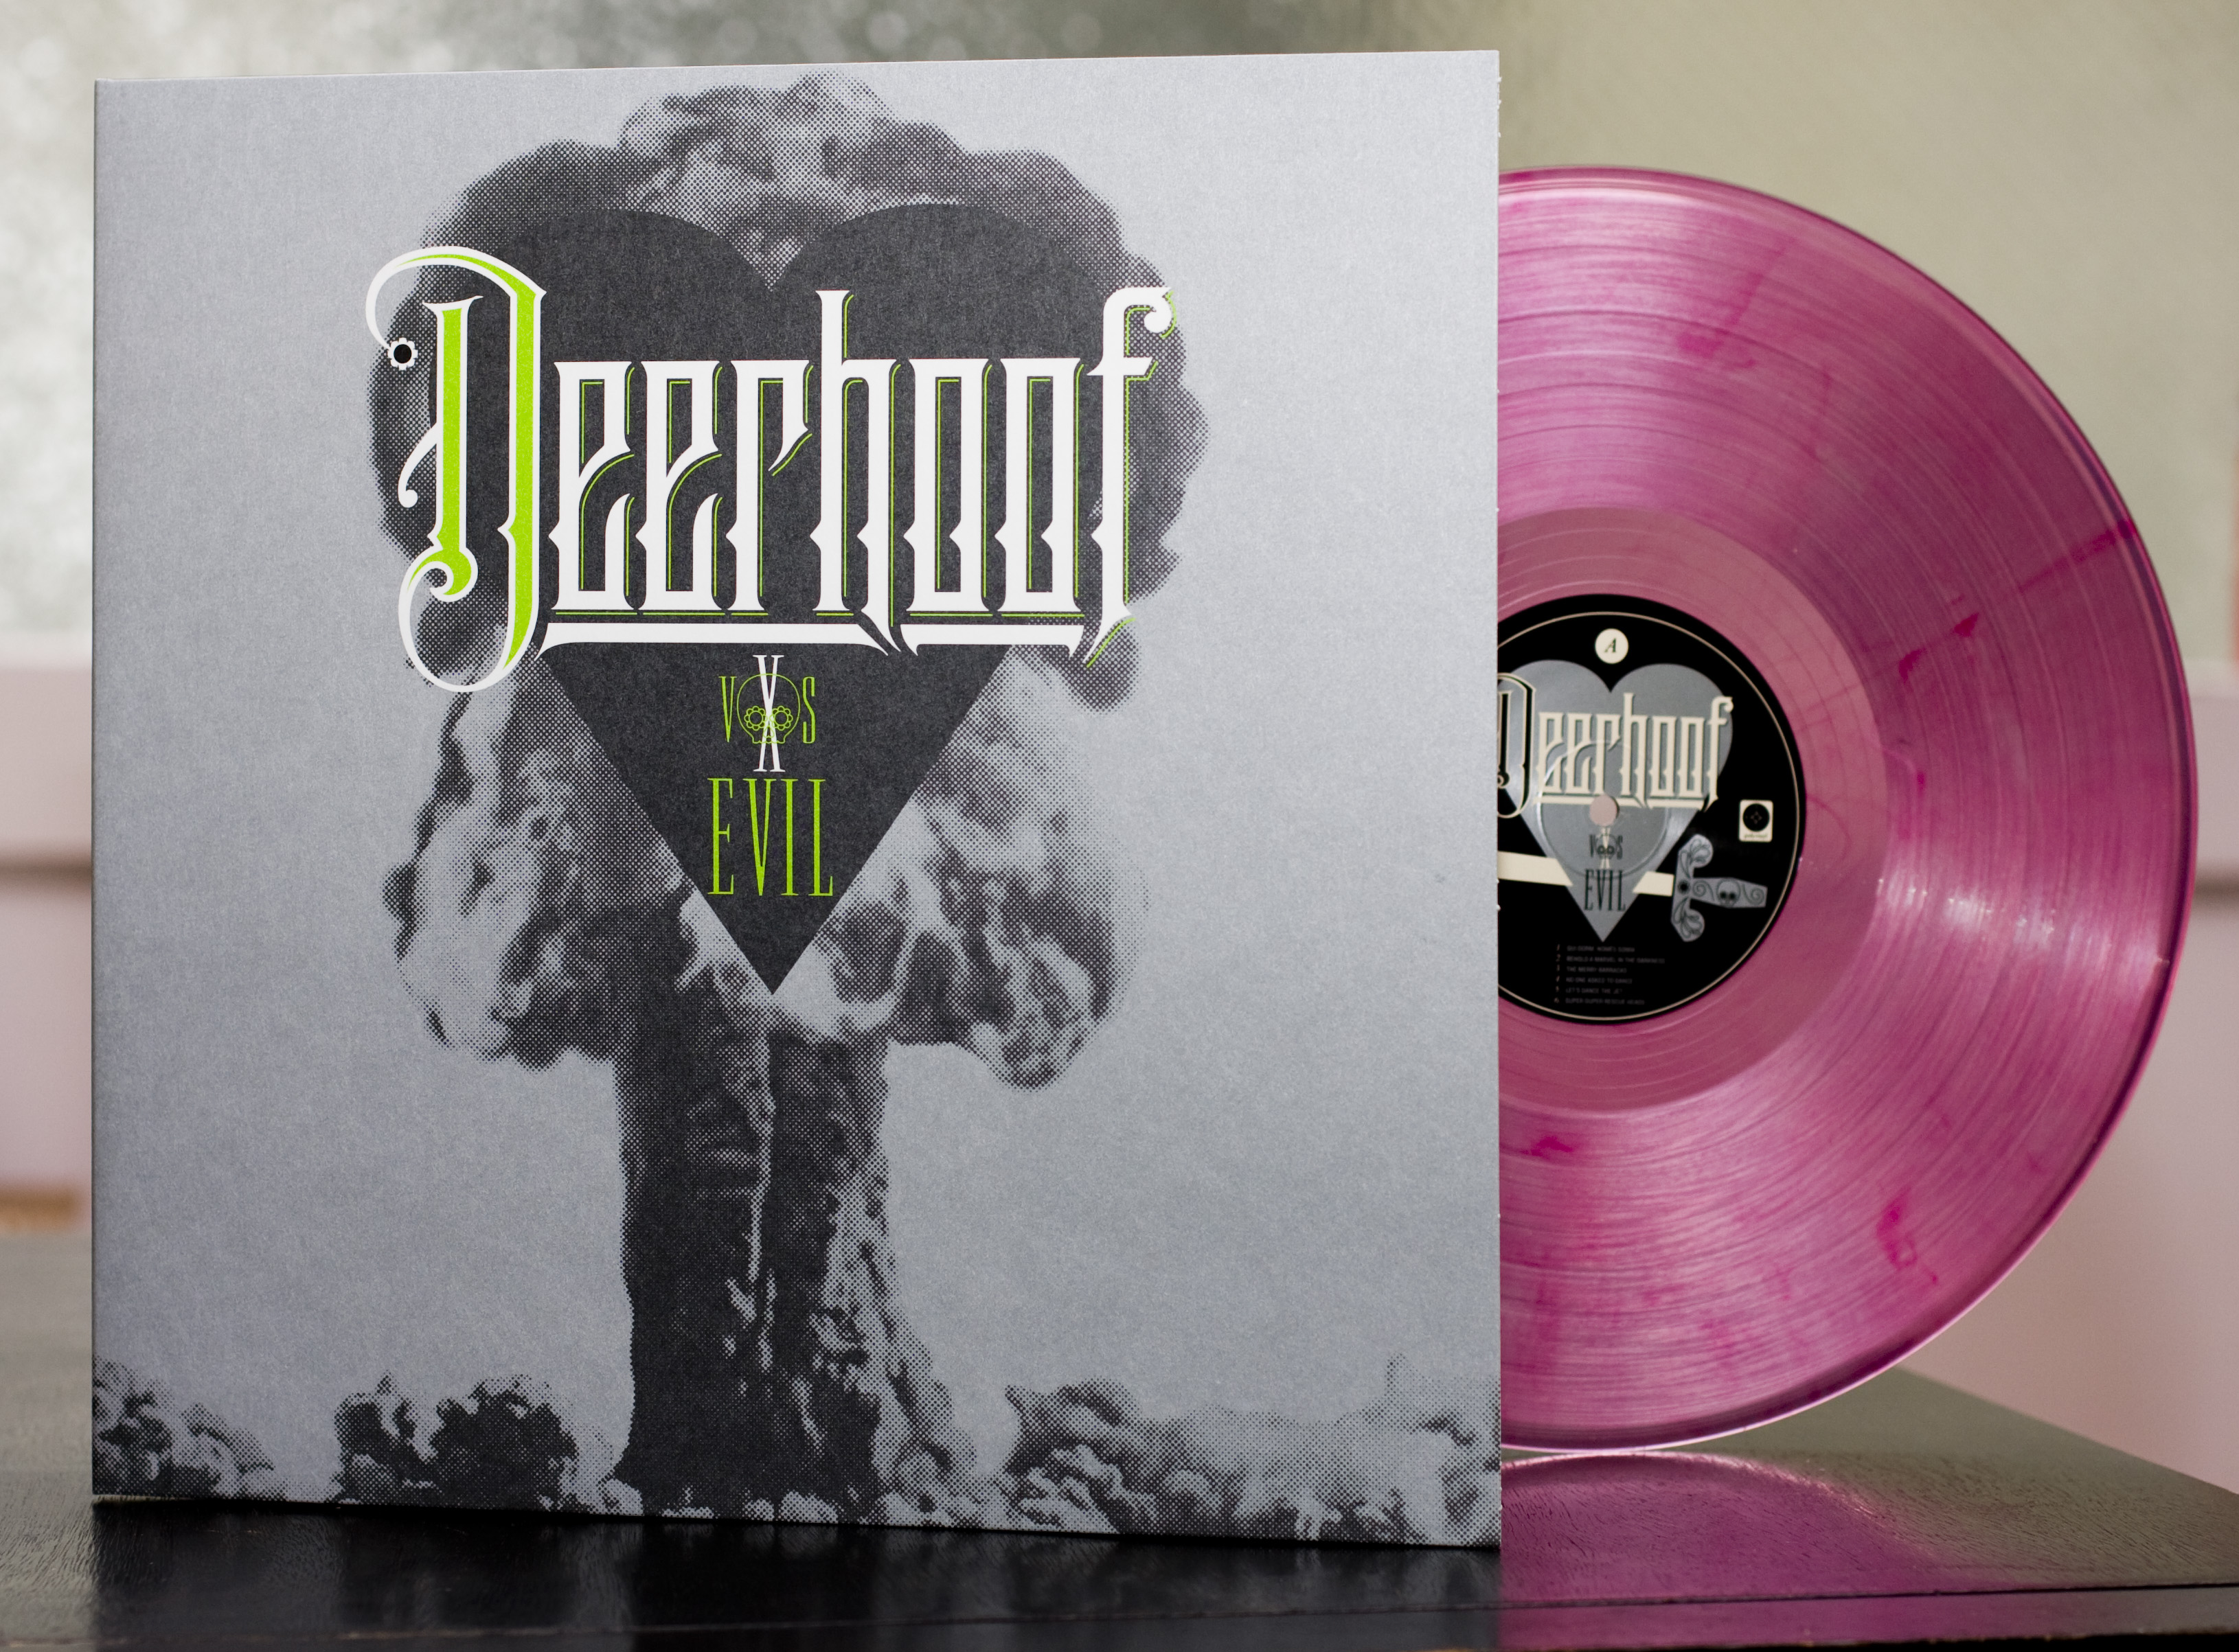 vinyl record creative Deerhoof vs. Evil